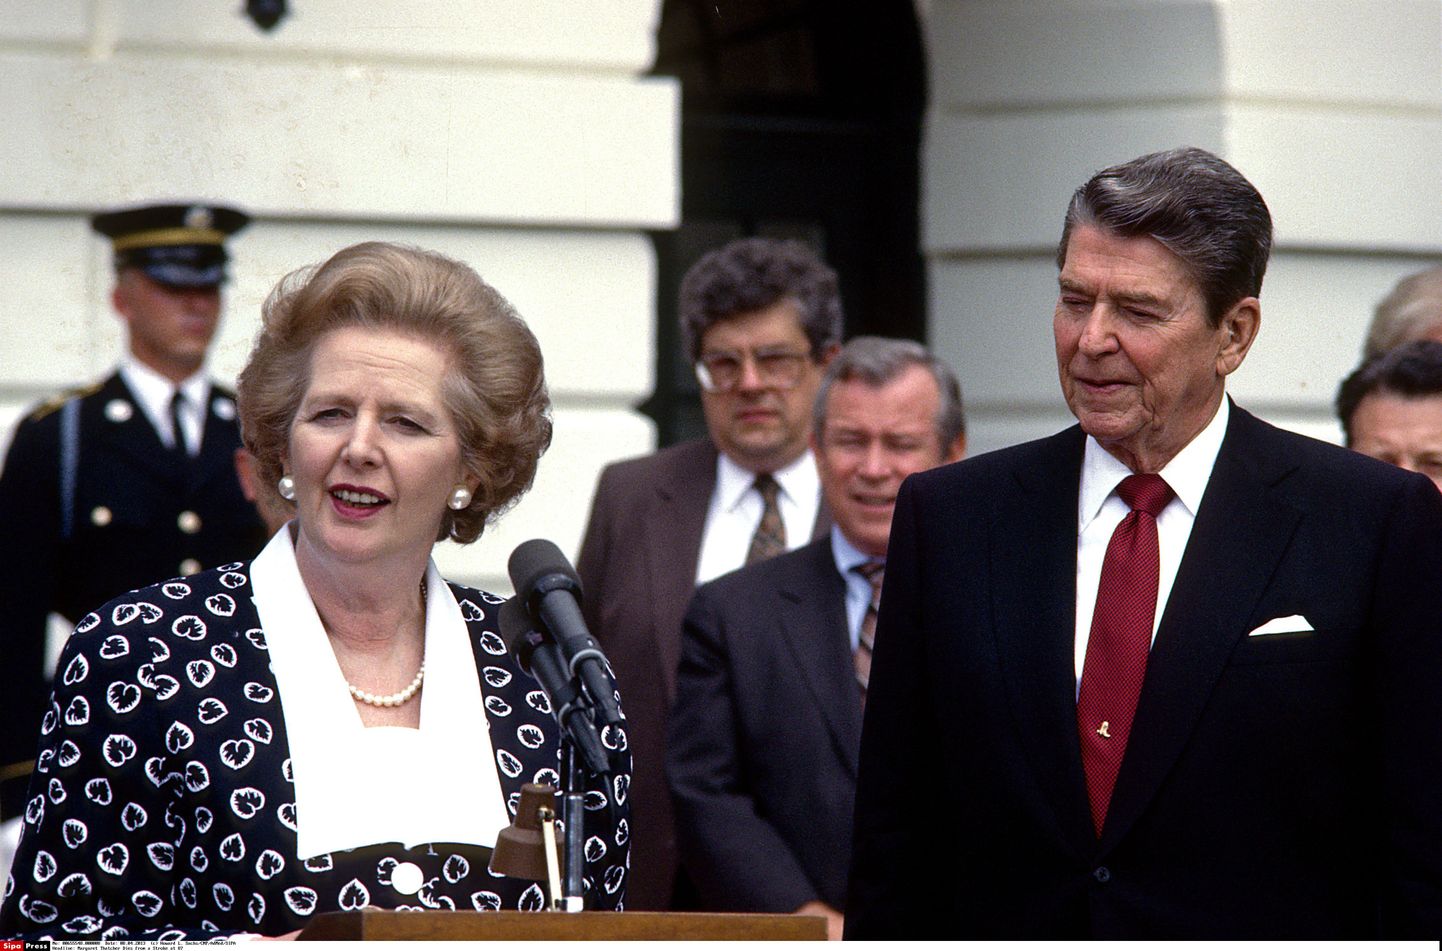 Margaret Thatcher ja Ronald Reagan (paremal) 1987. aasta fotol.